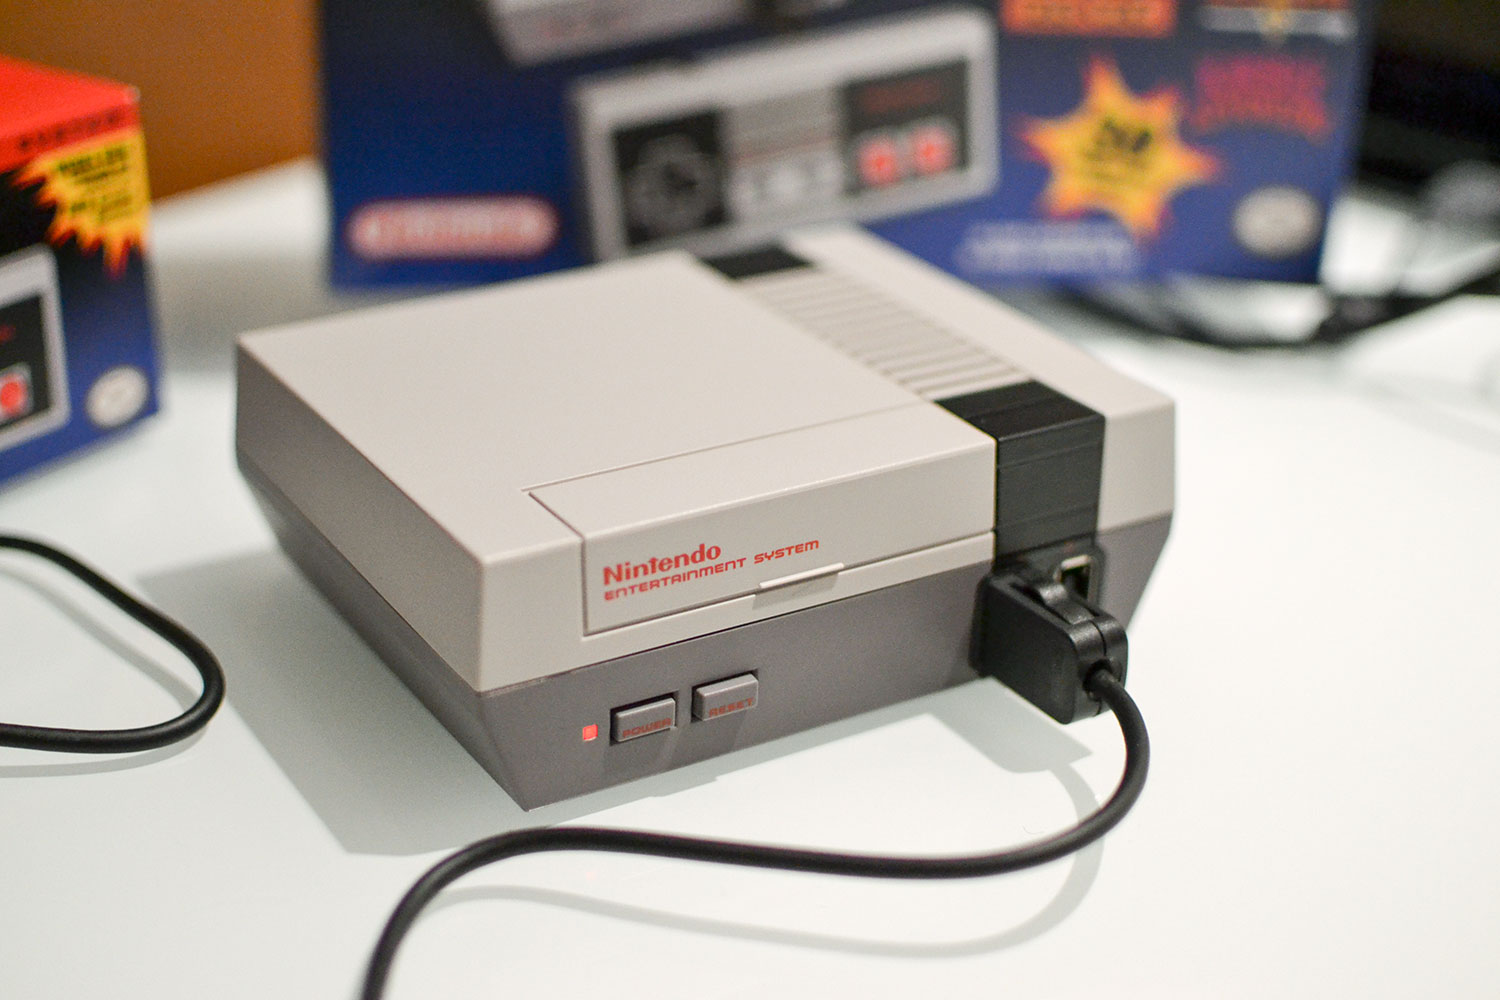 Nintendo's mini-console brings back classic games: Pac-Man, Donkey Kong,  Legend of Zelda 